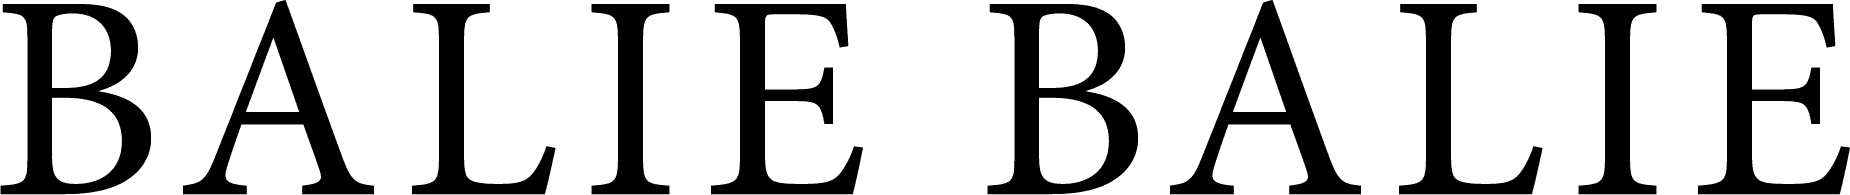 Balie Balie logo